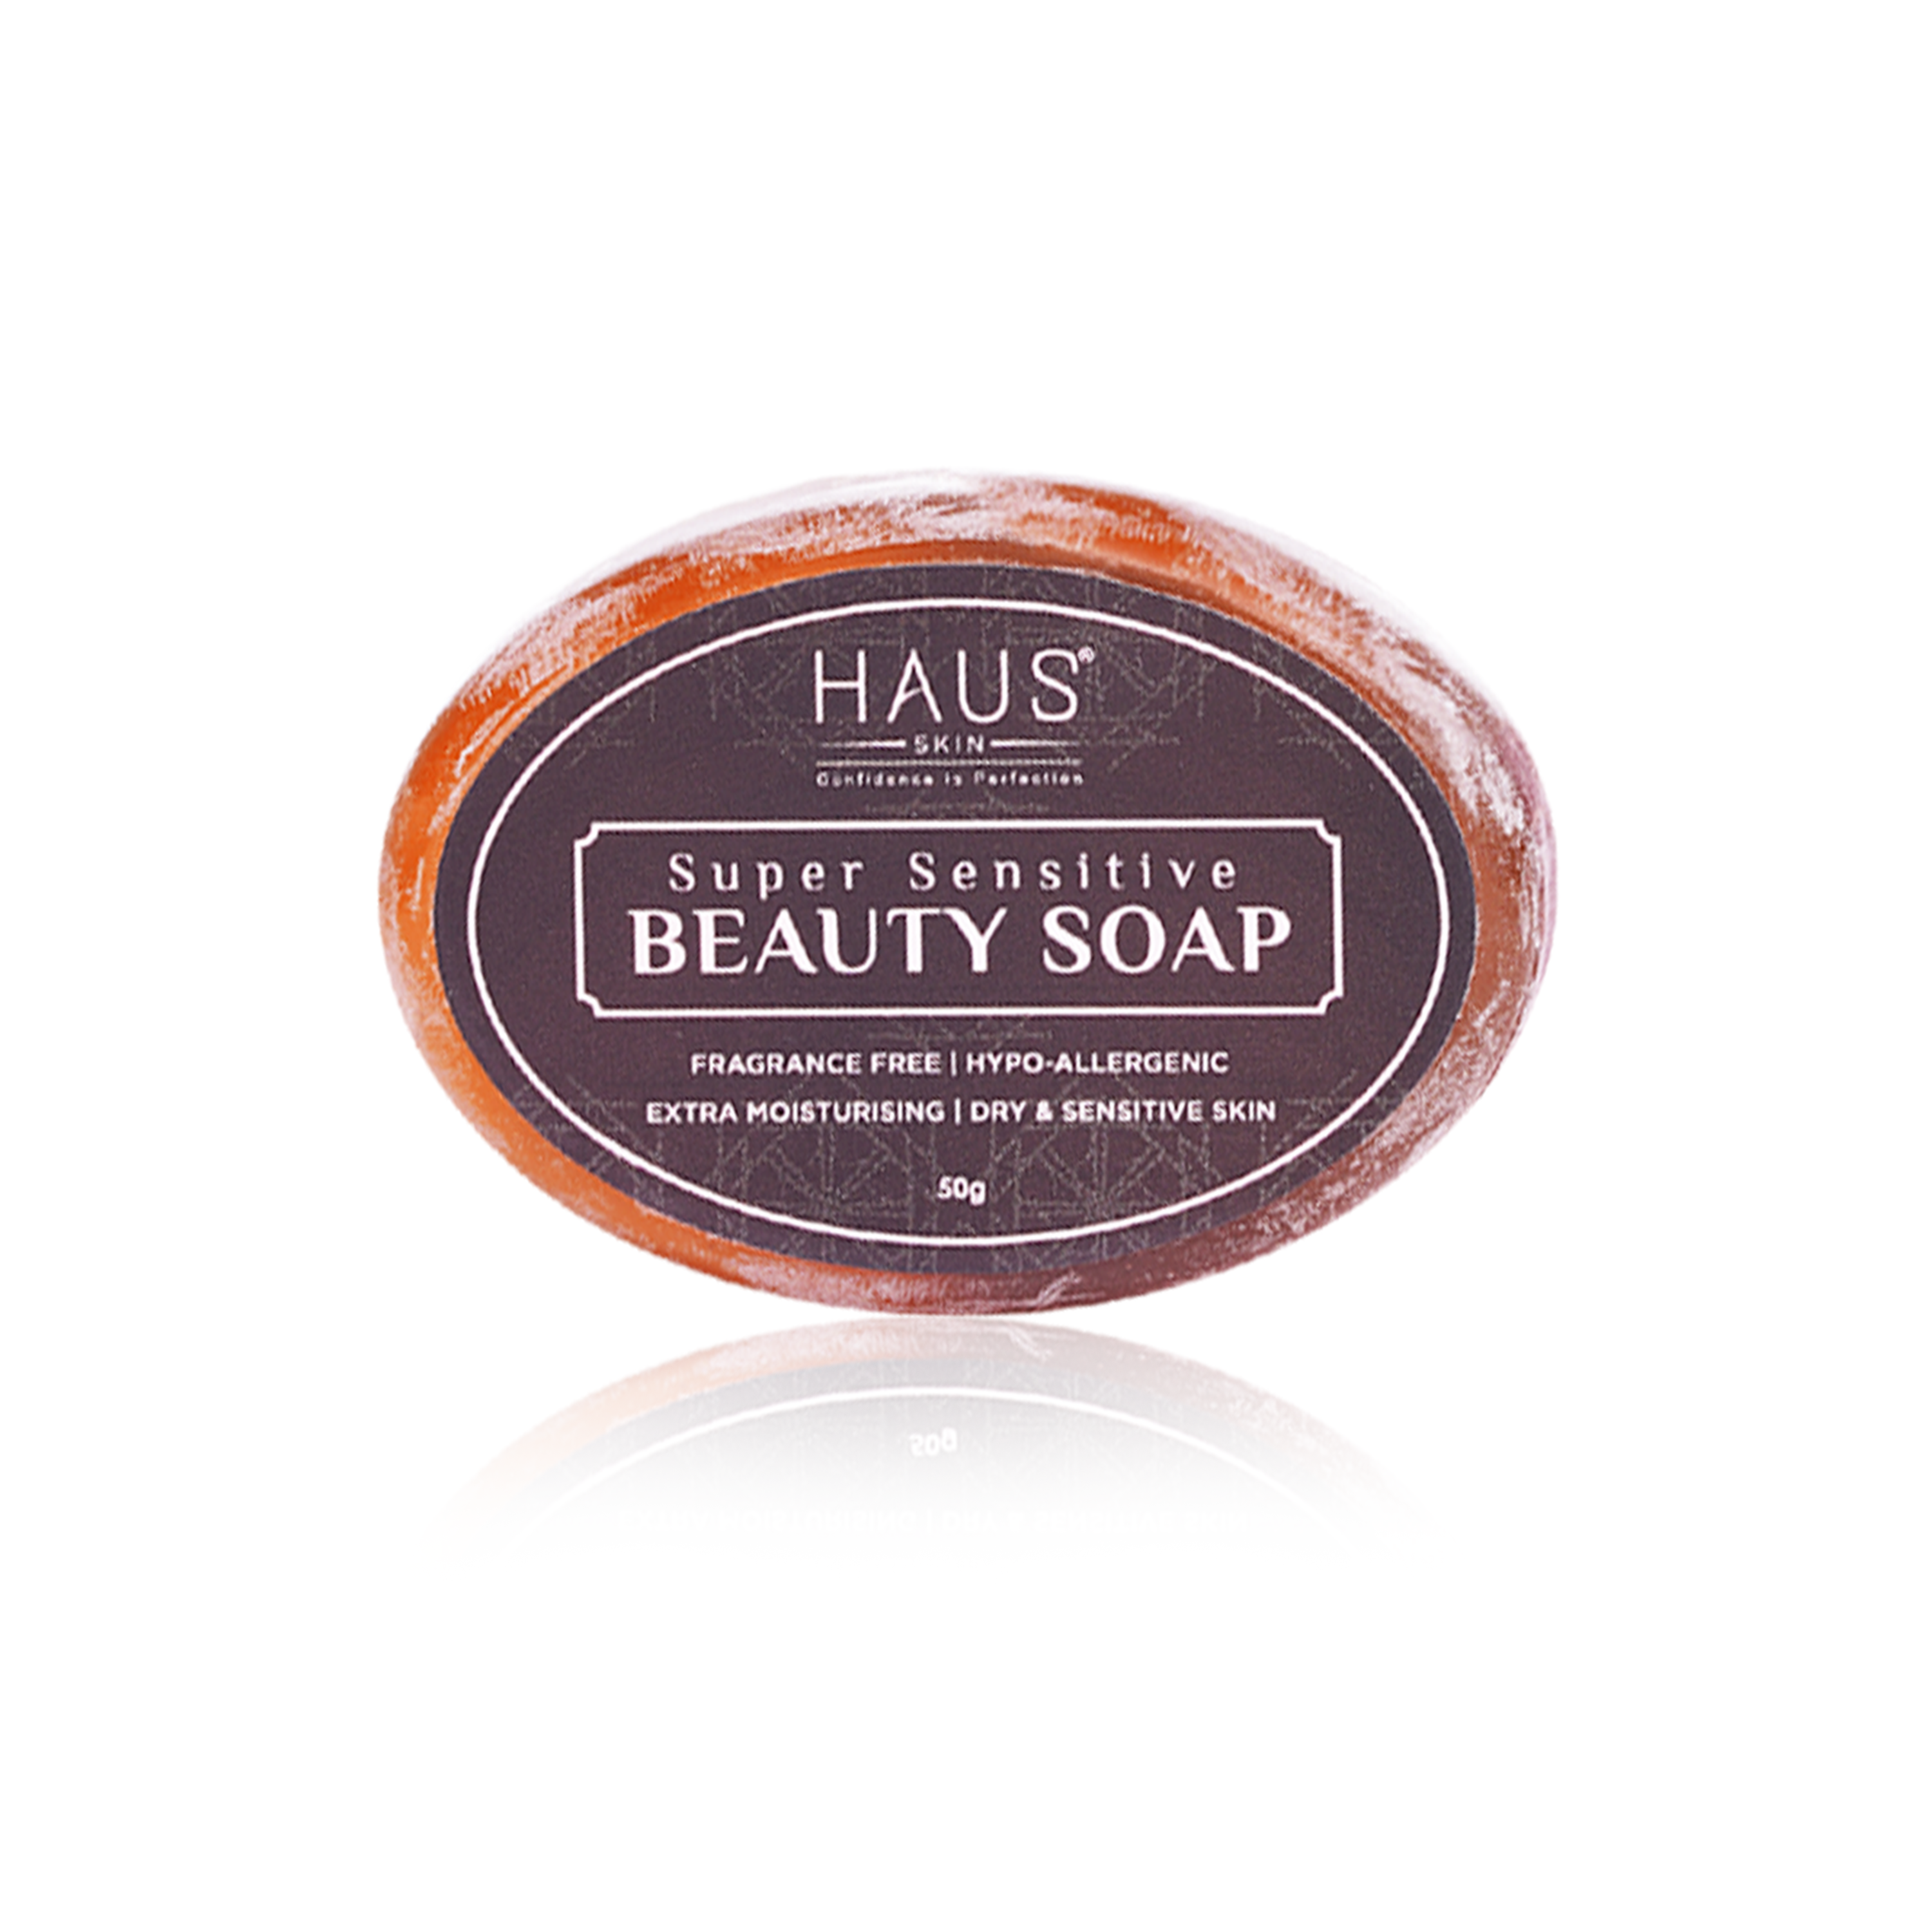 Super Sensitive Beauty Soap